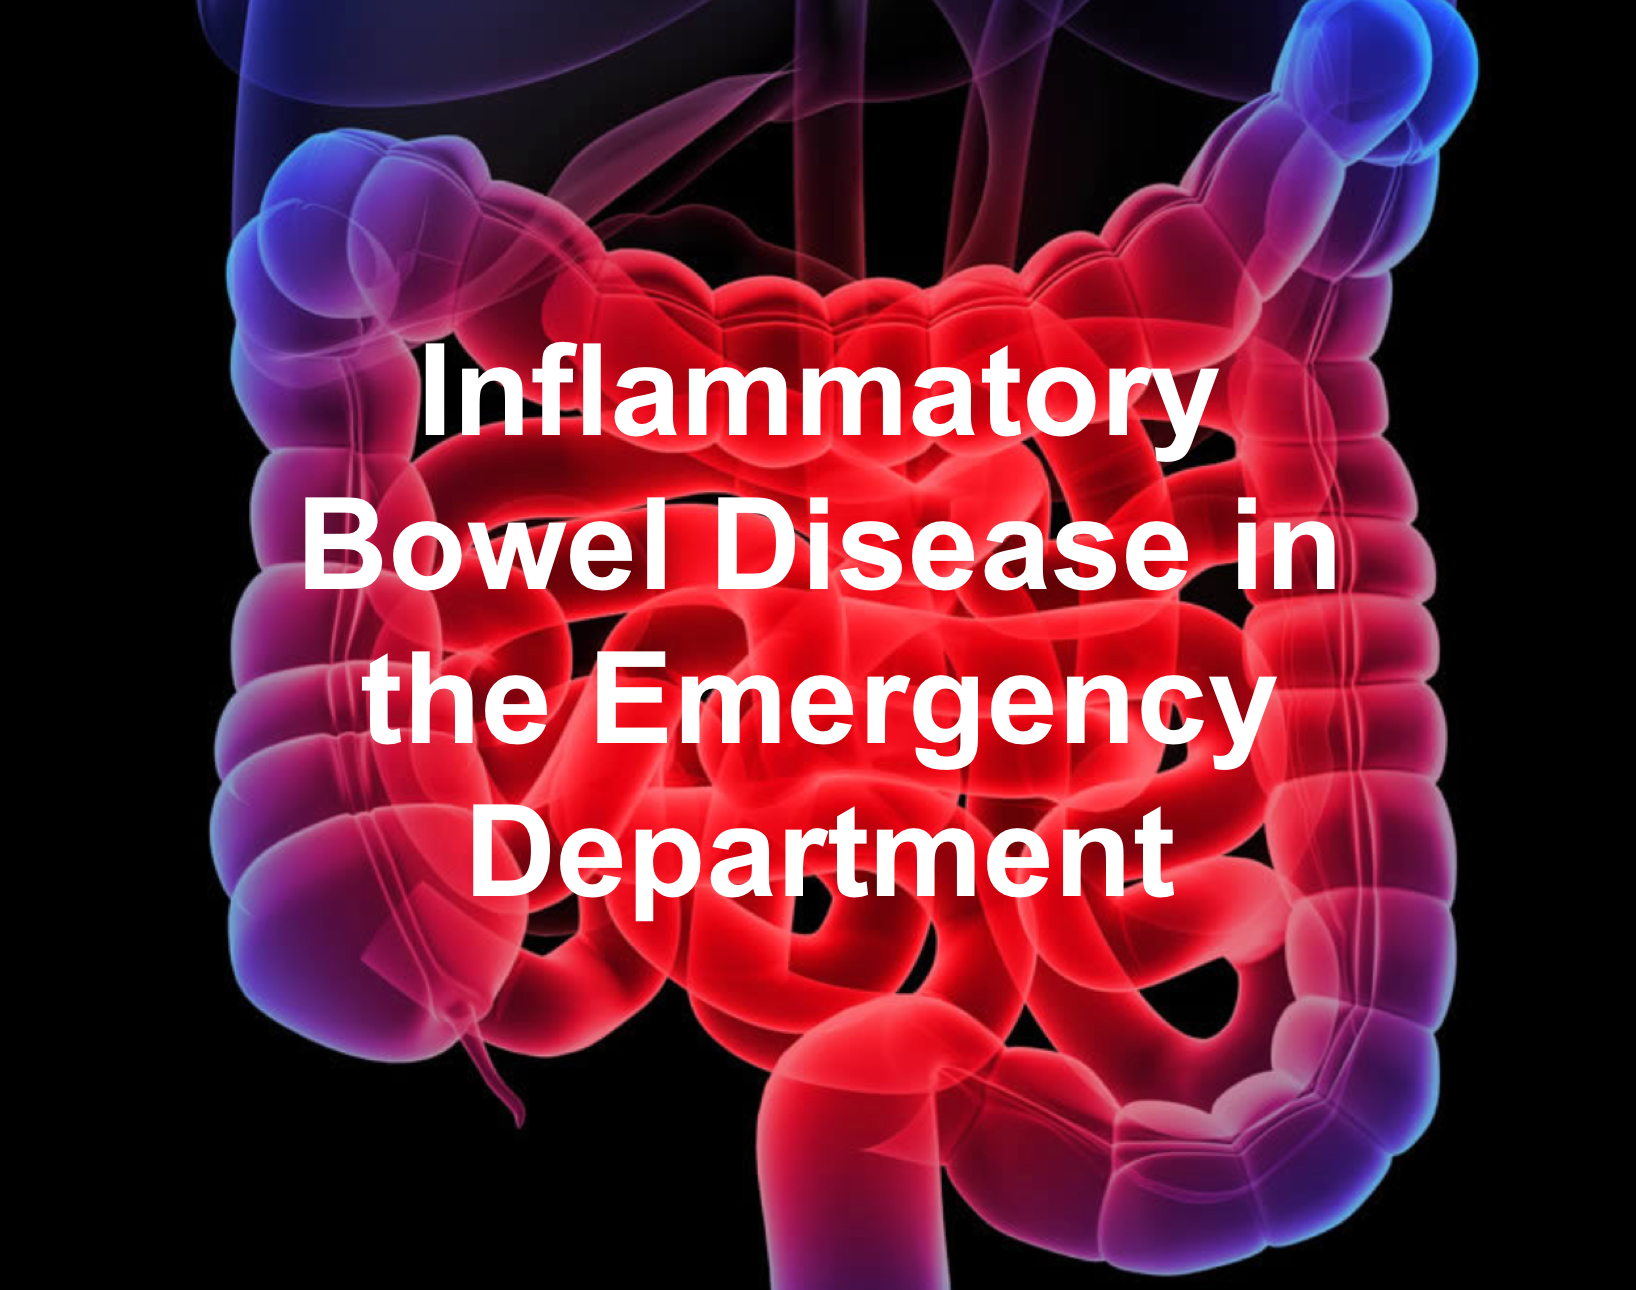 inflammatory bowel disease